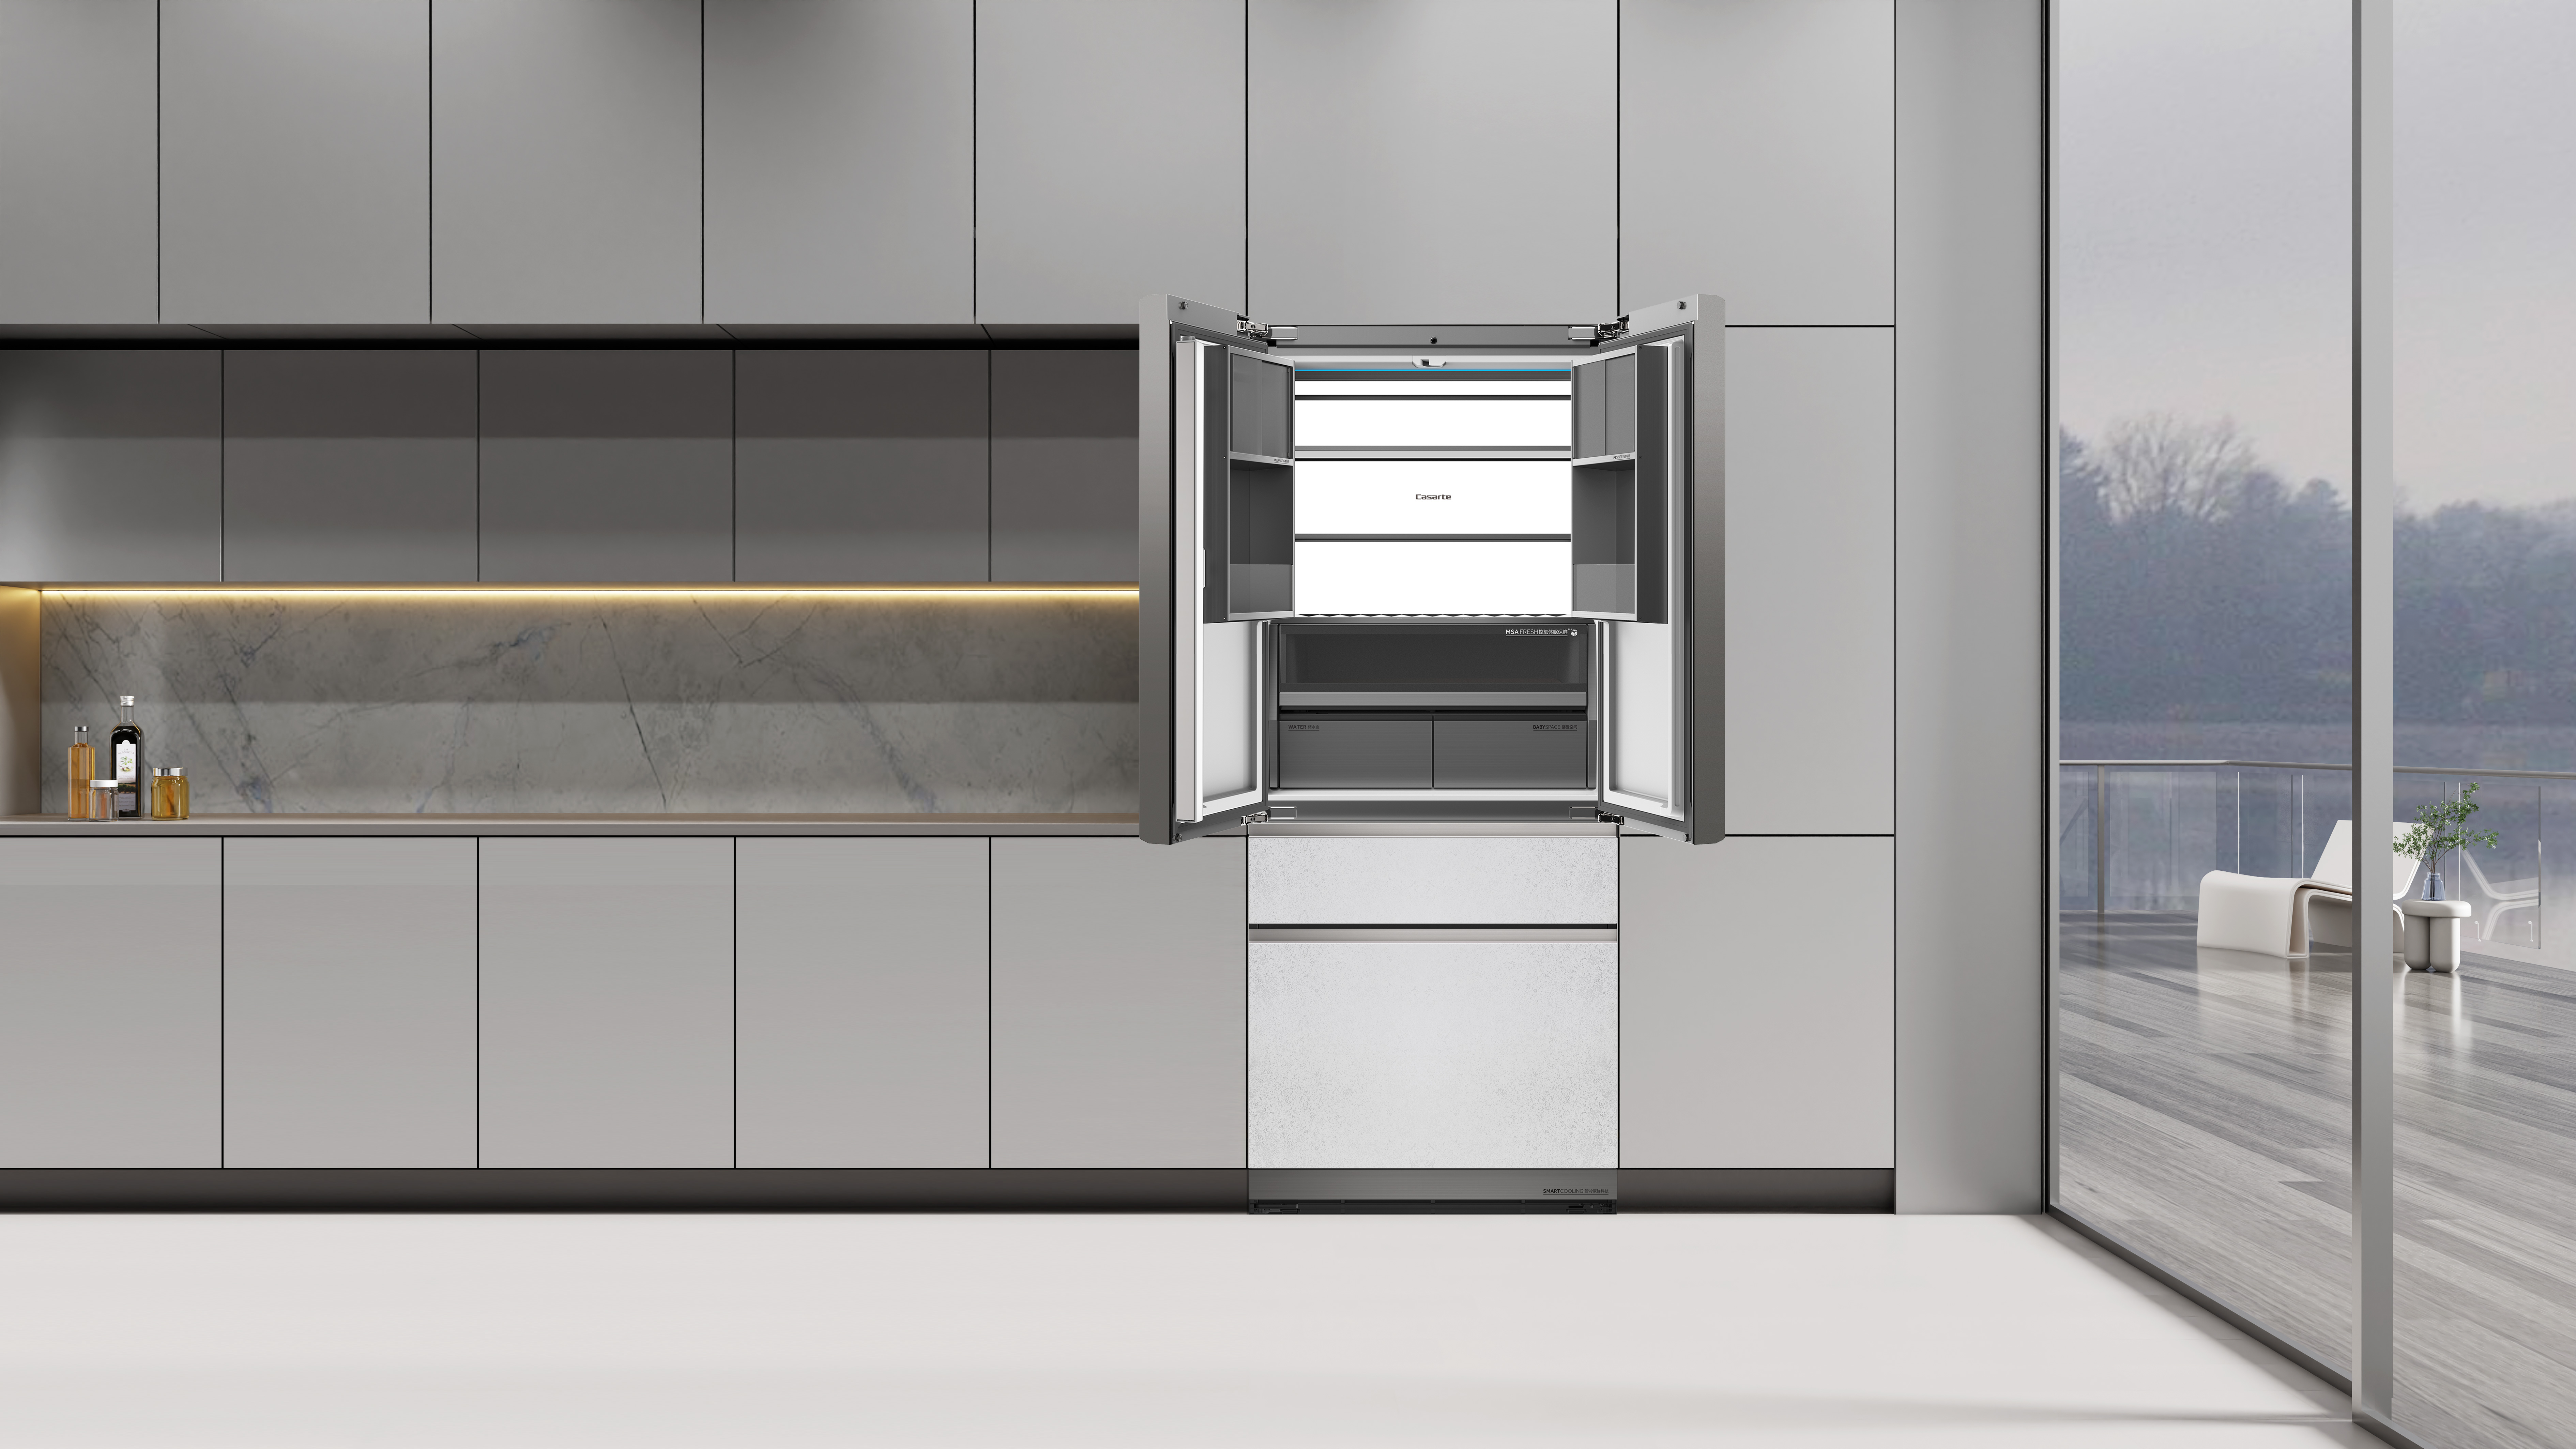 Casarte Designer Series Refrigerator